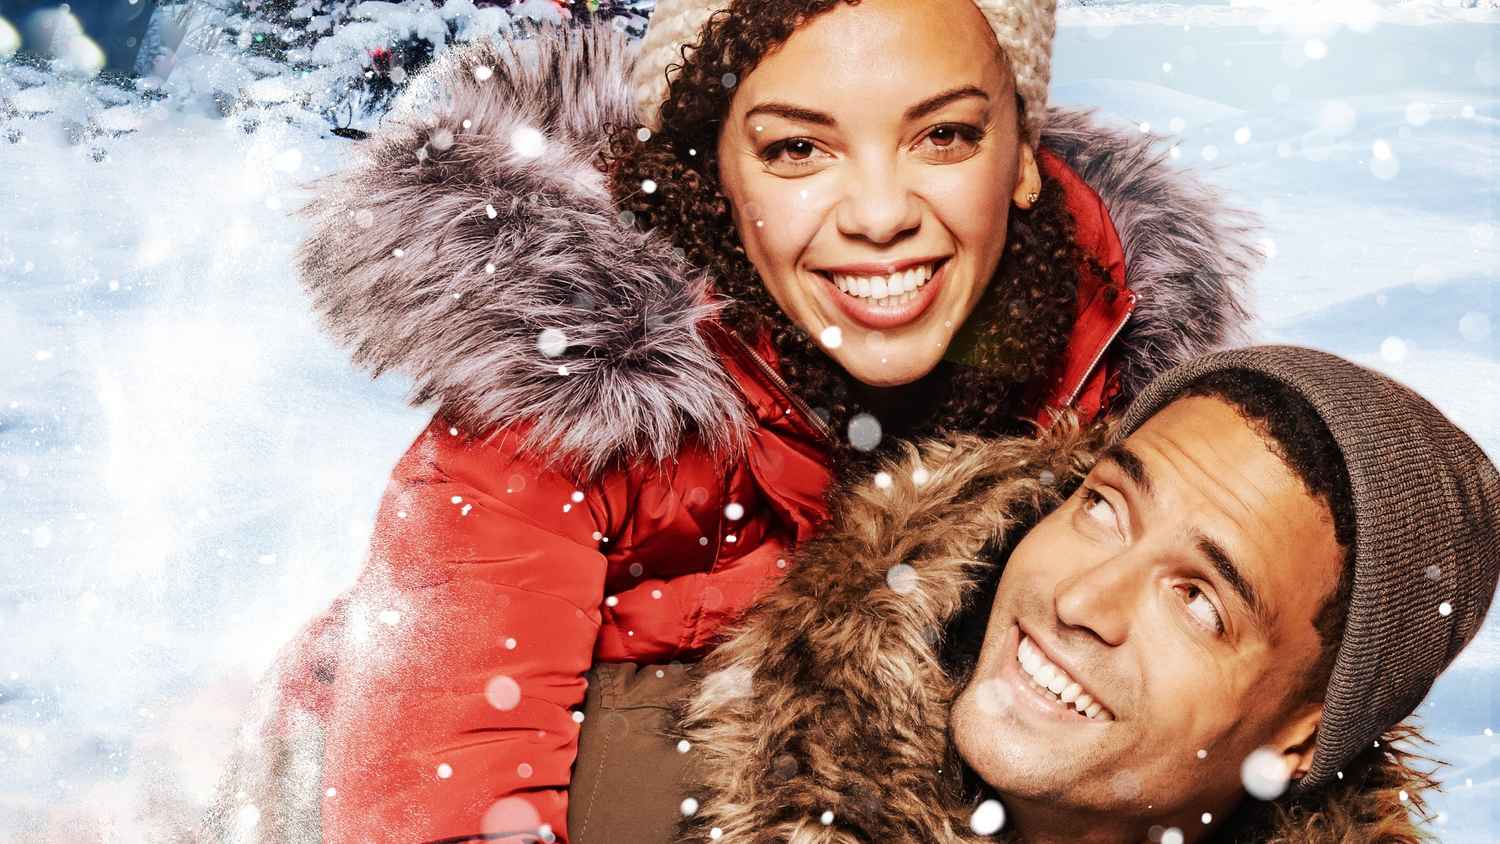 Watch Snowbound for Christmas Full Movie Online, Romance Film